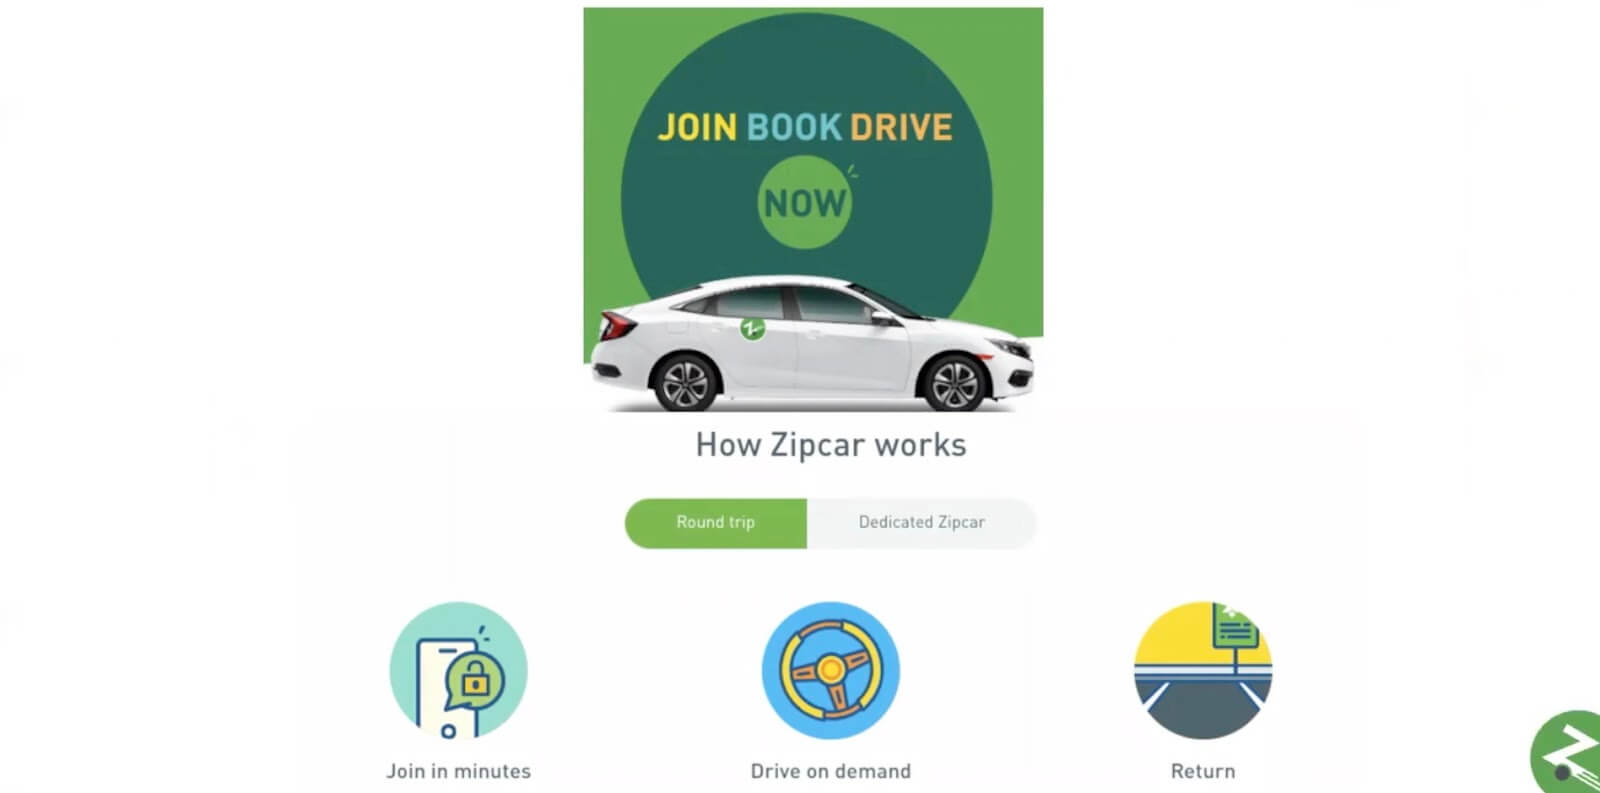 Zipcar logo and car image